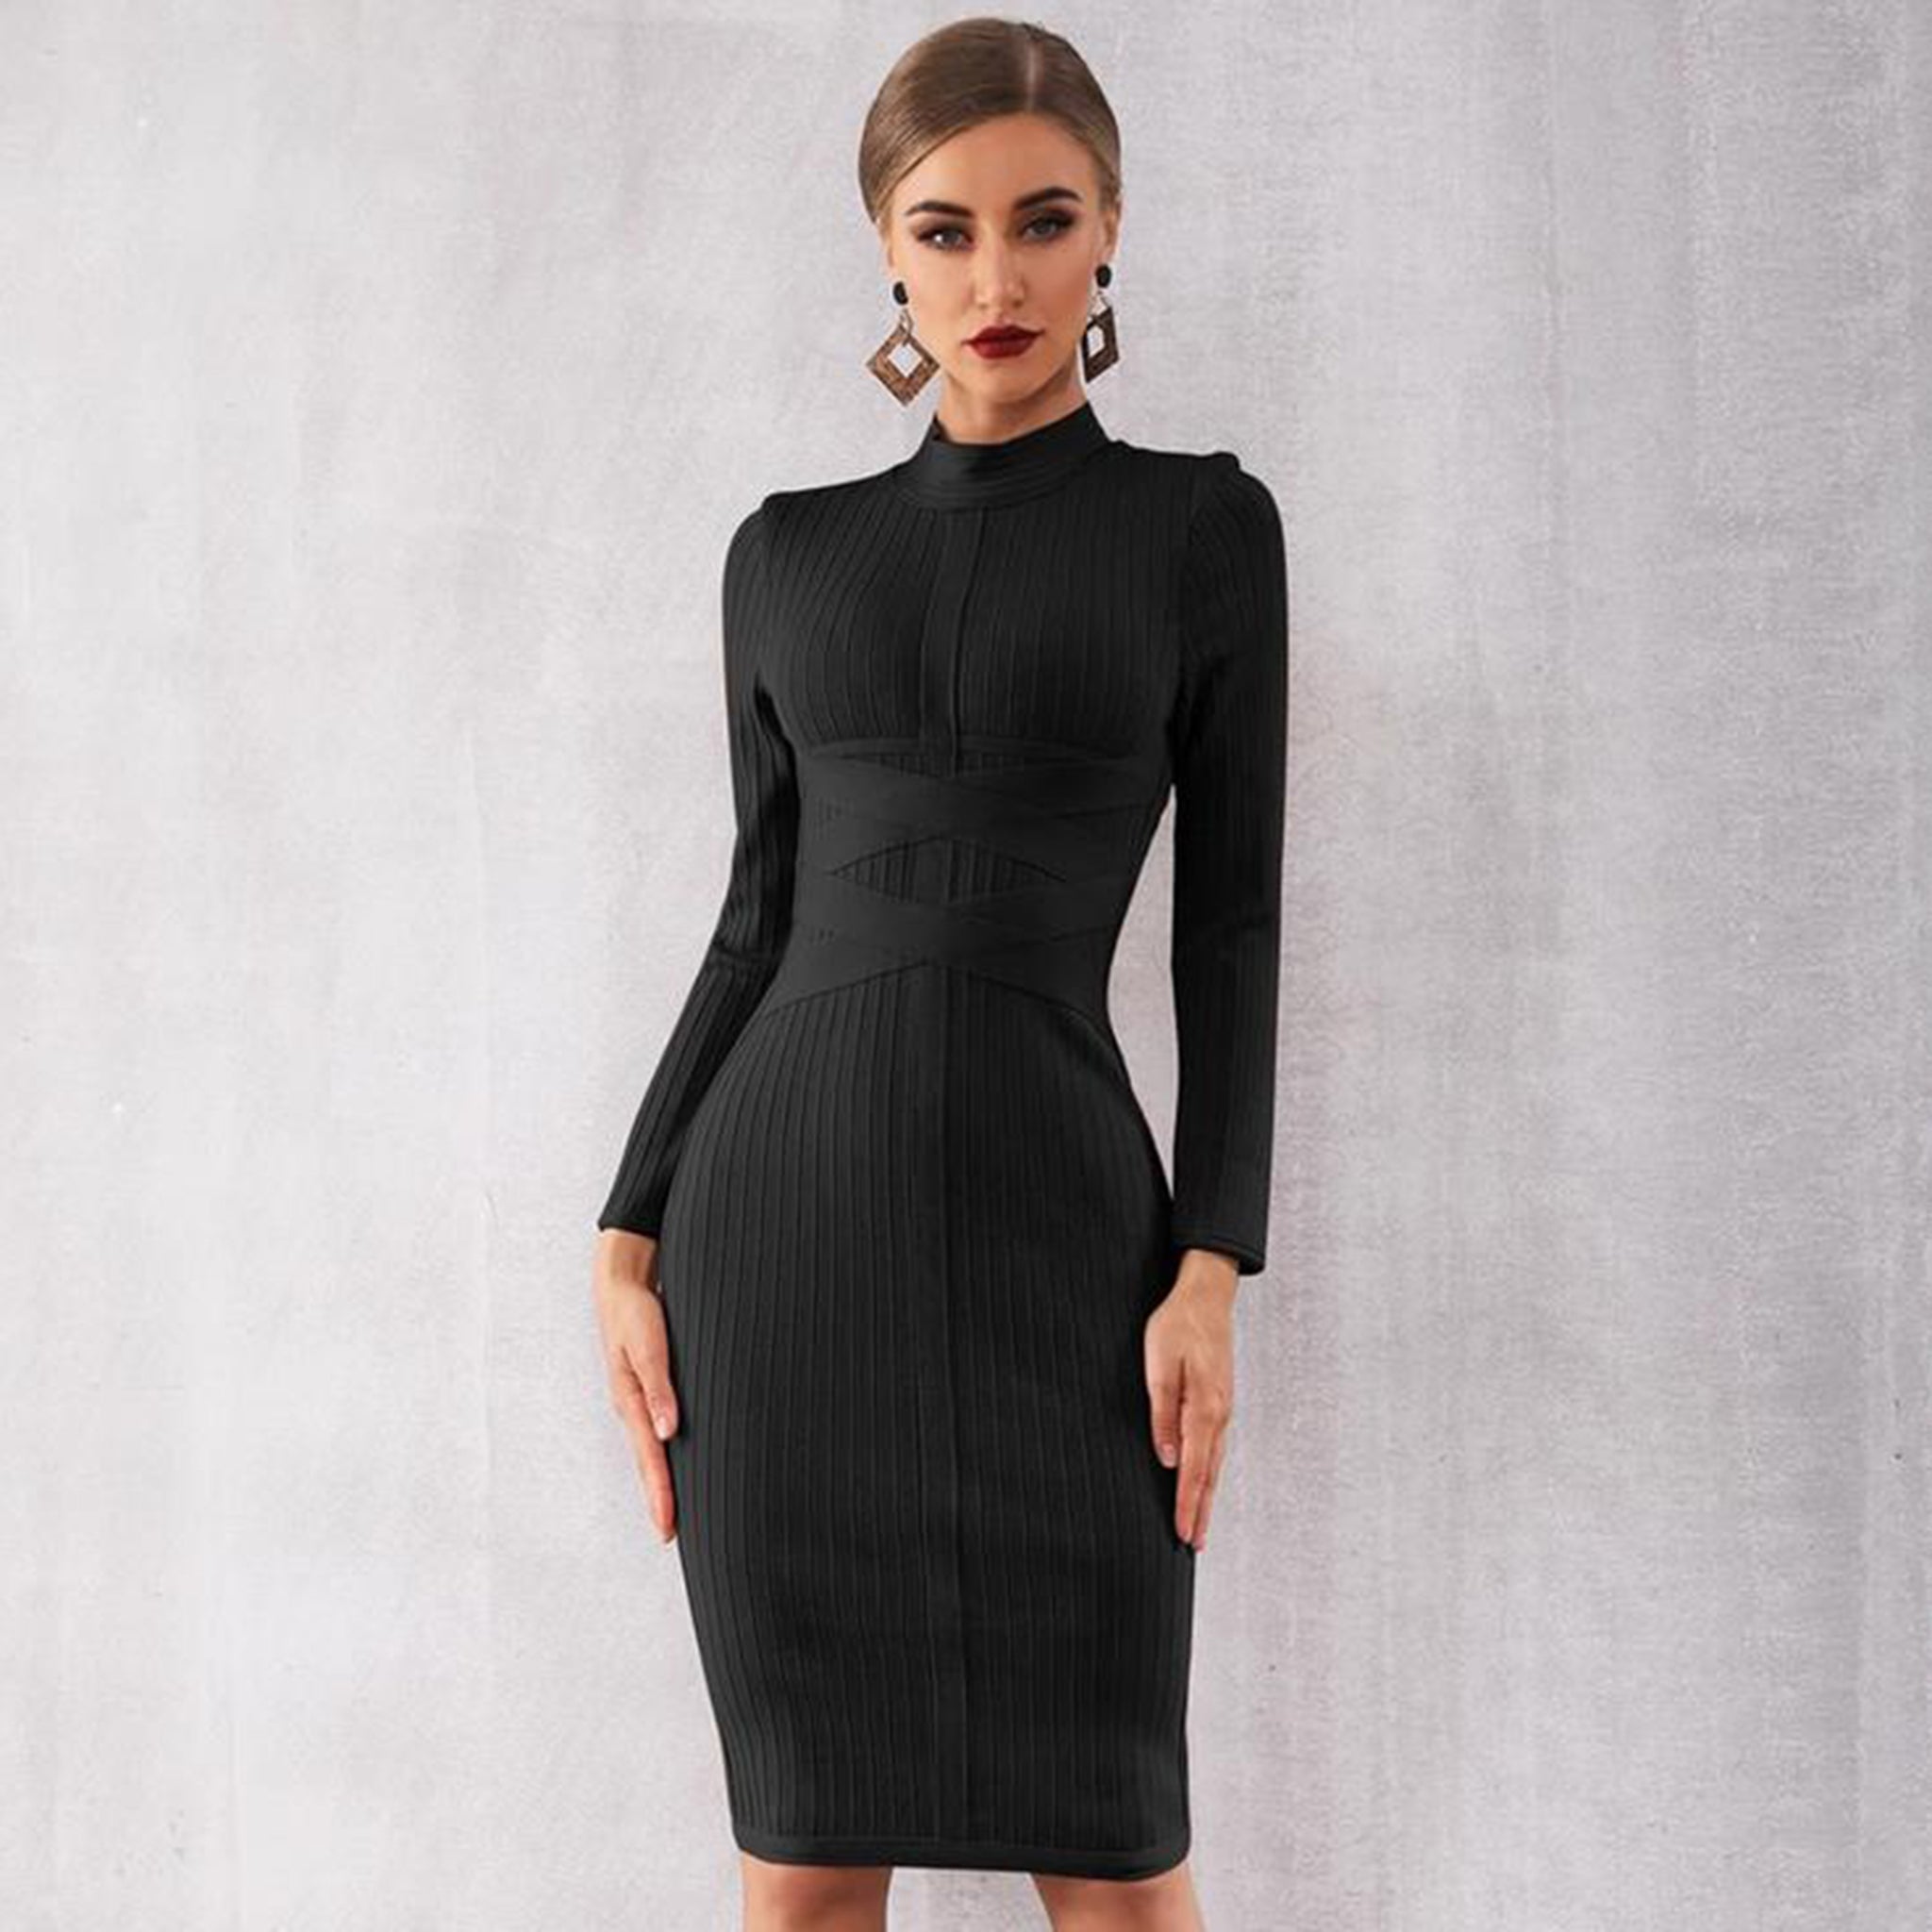 Lorena Bandage Dress- Black - Top Glam Shop